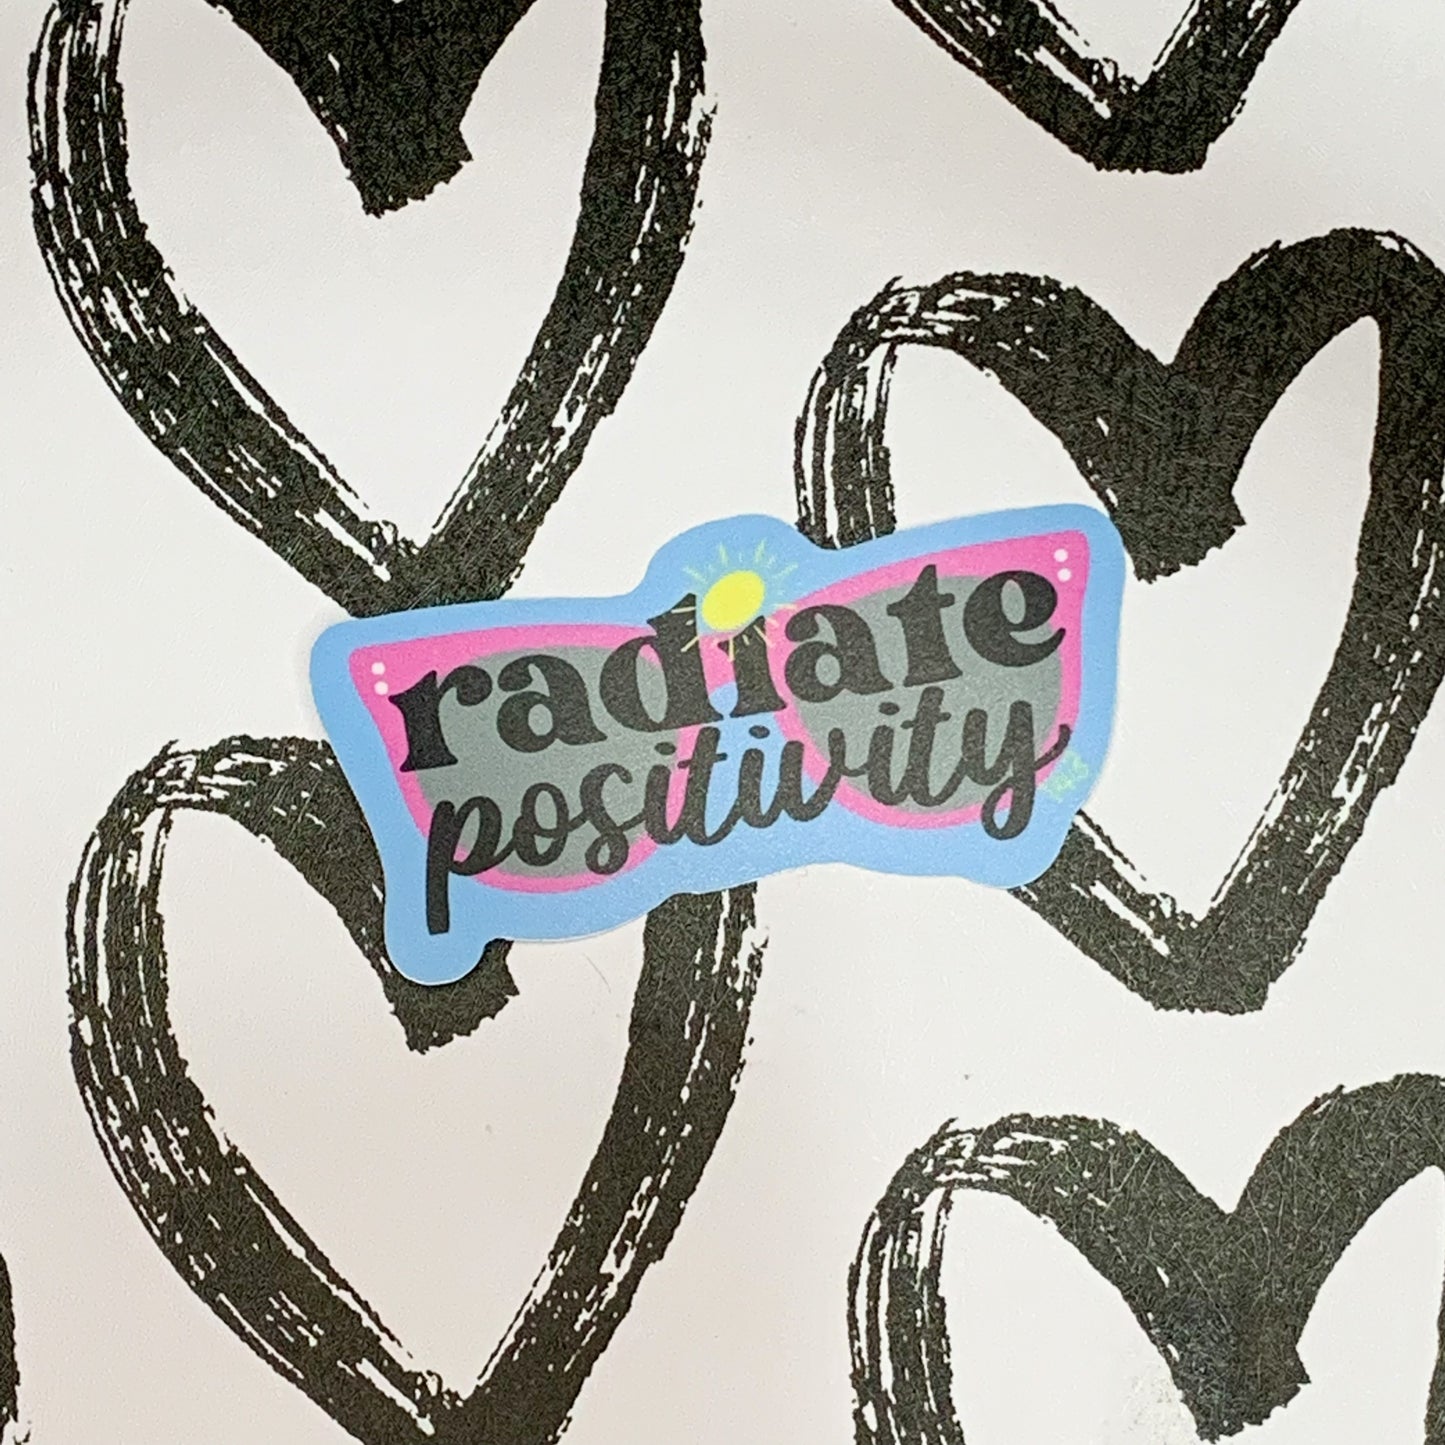 Radiate Positivity - Affirmation Sticker